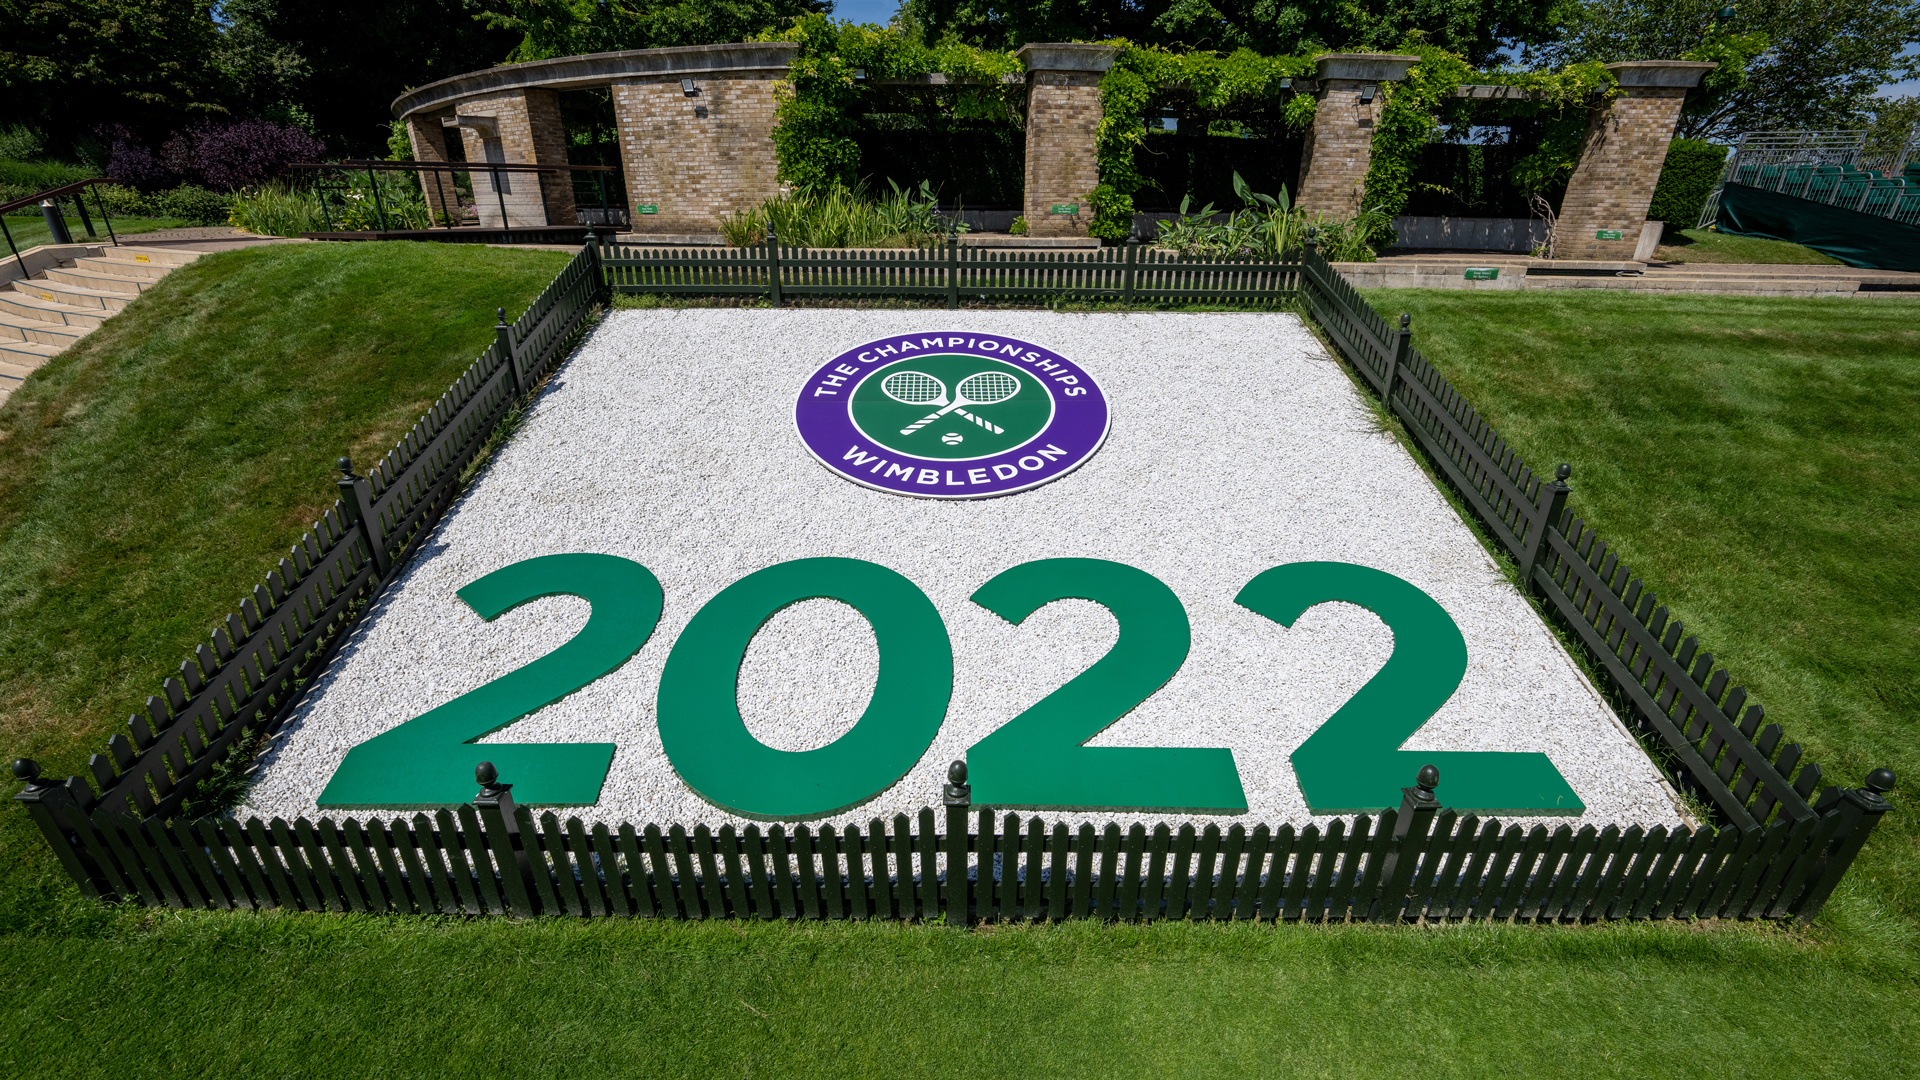 Wimbledon 2022 IBM 1920x1080 (1).